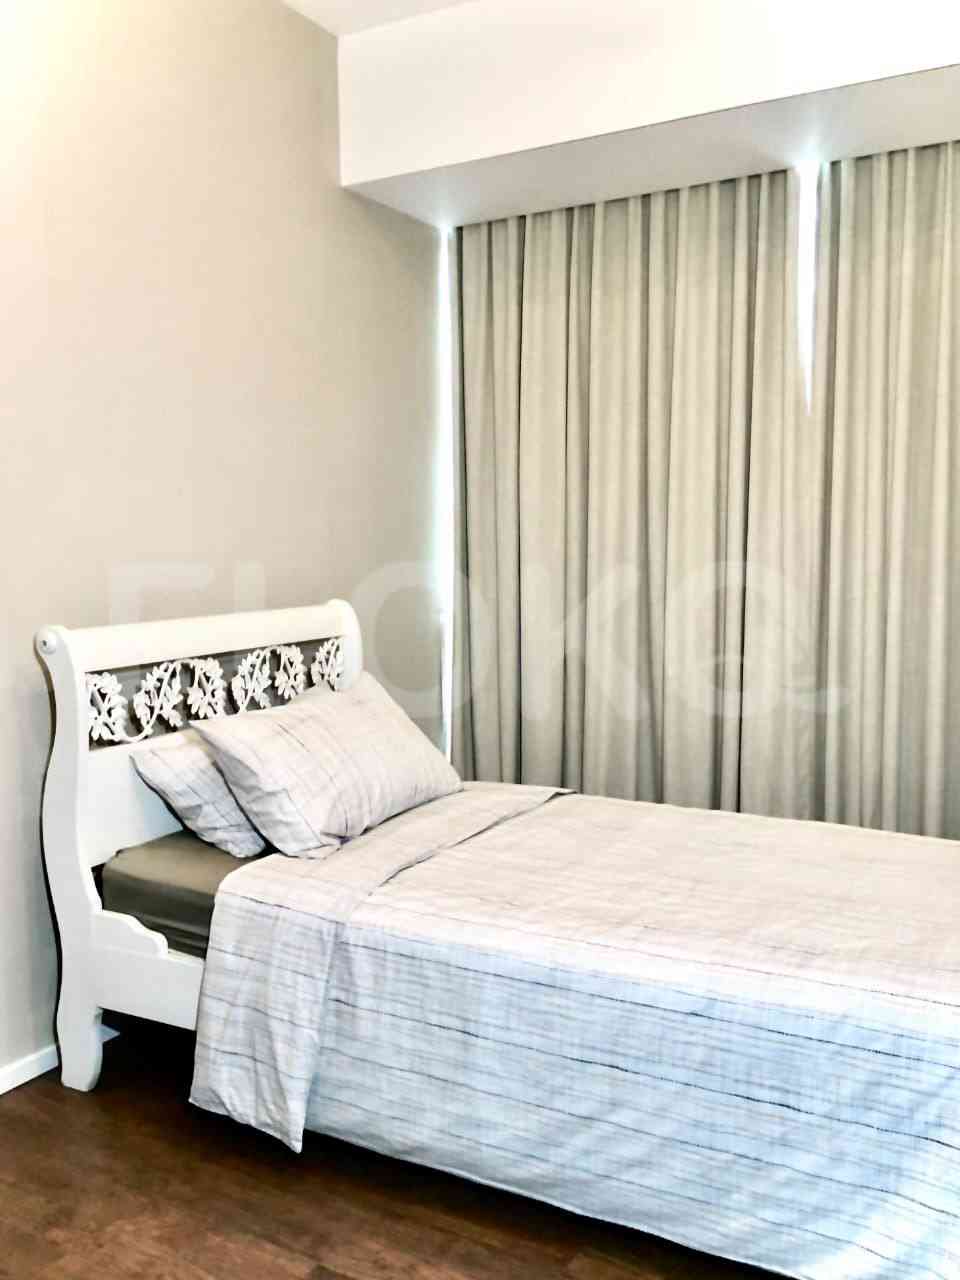 3 Bedroom on 20th Floor for Rent in Kemang Village Residence - fke21a 1